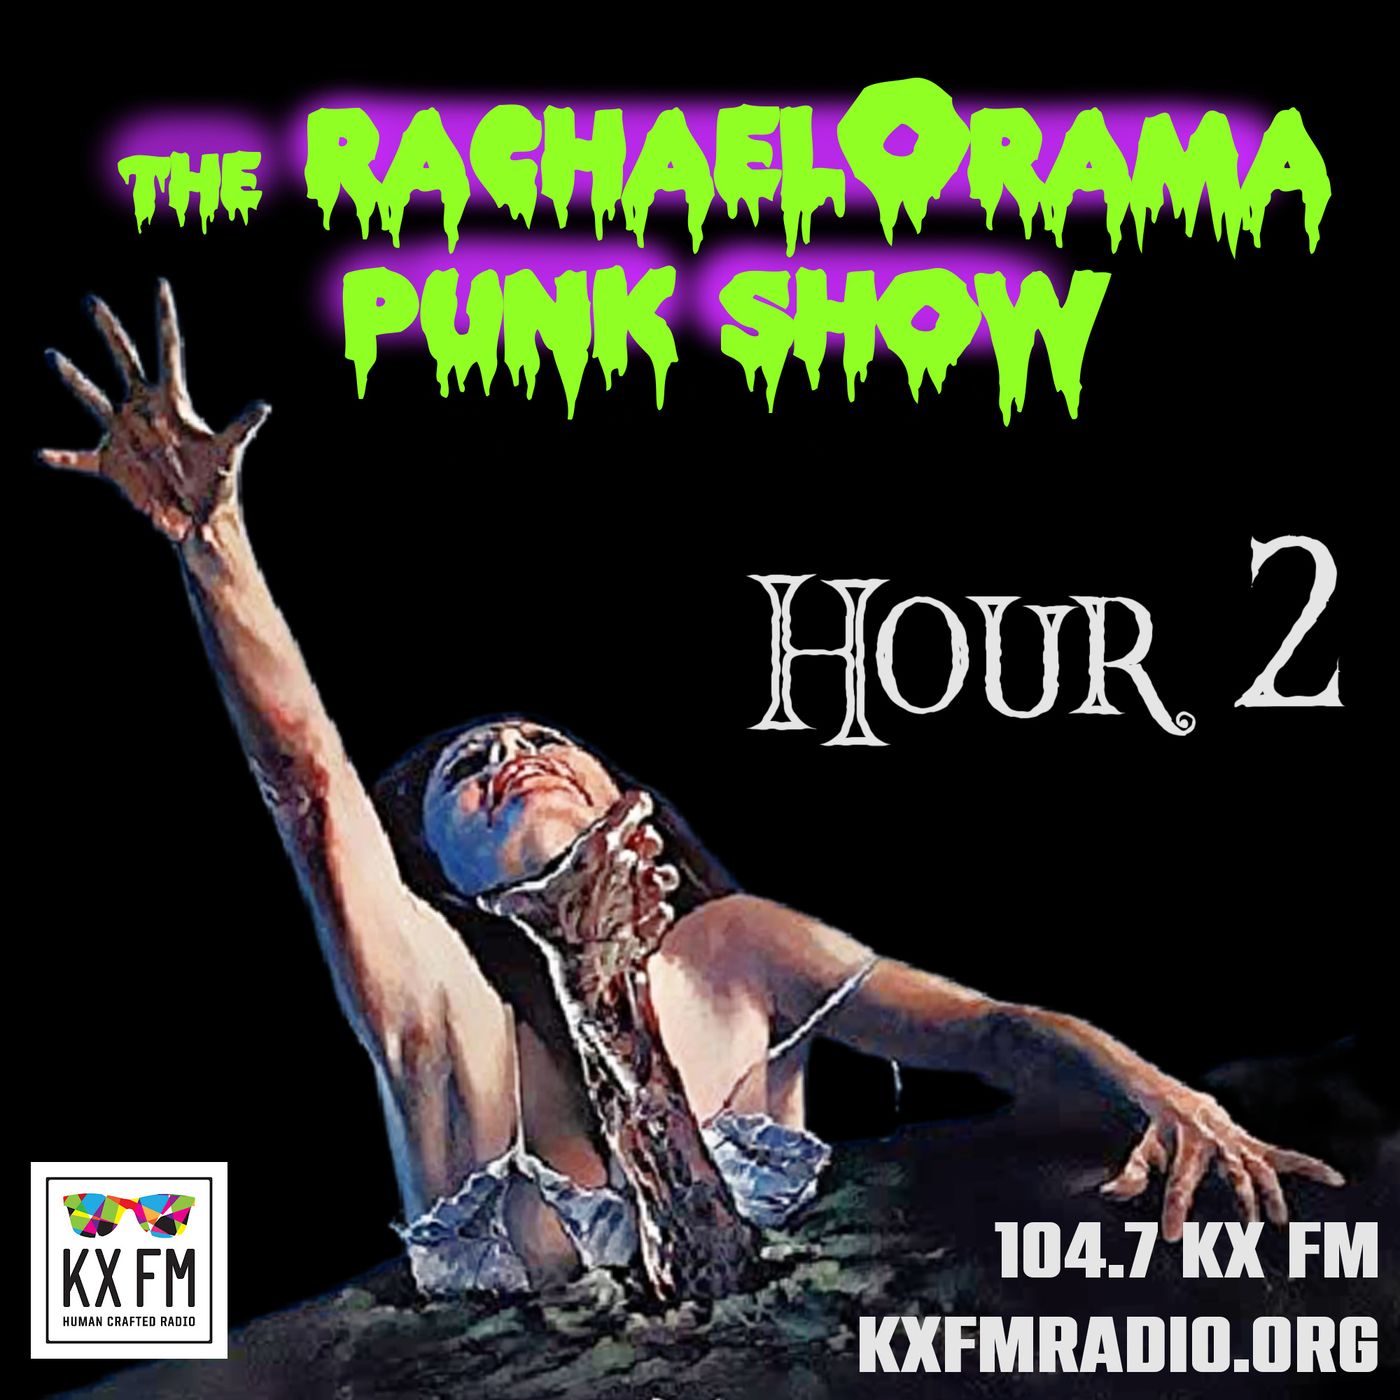 The RachaelORama Punk Show 9:27:23 Hour 2